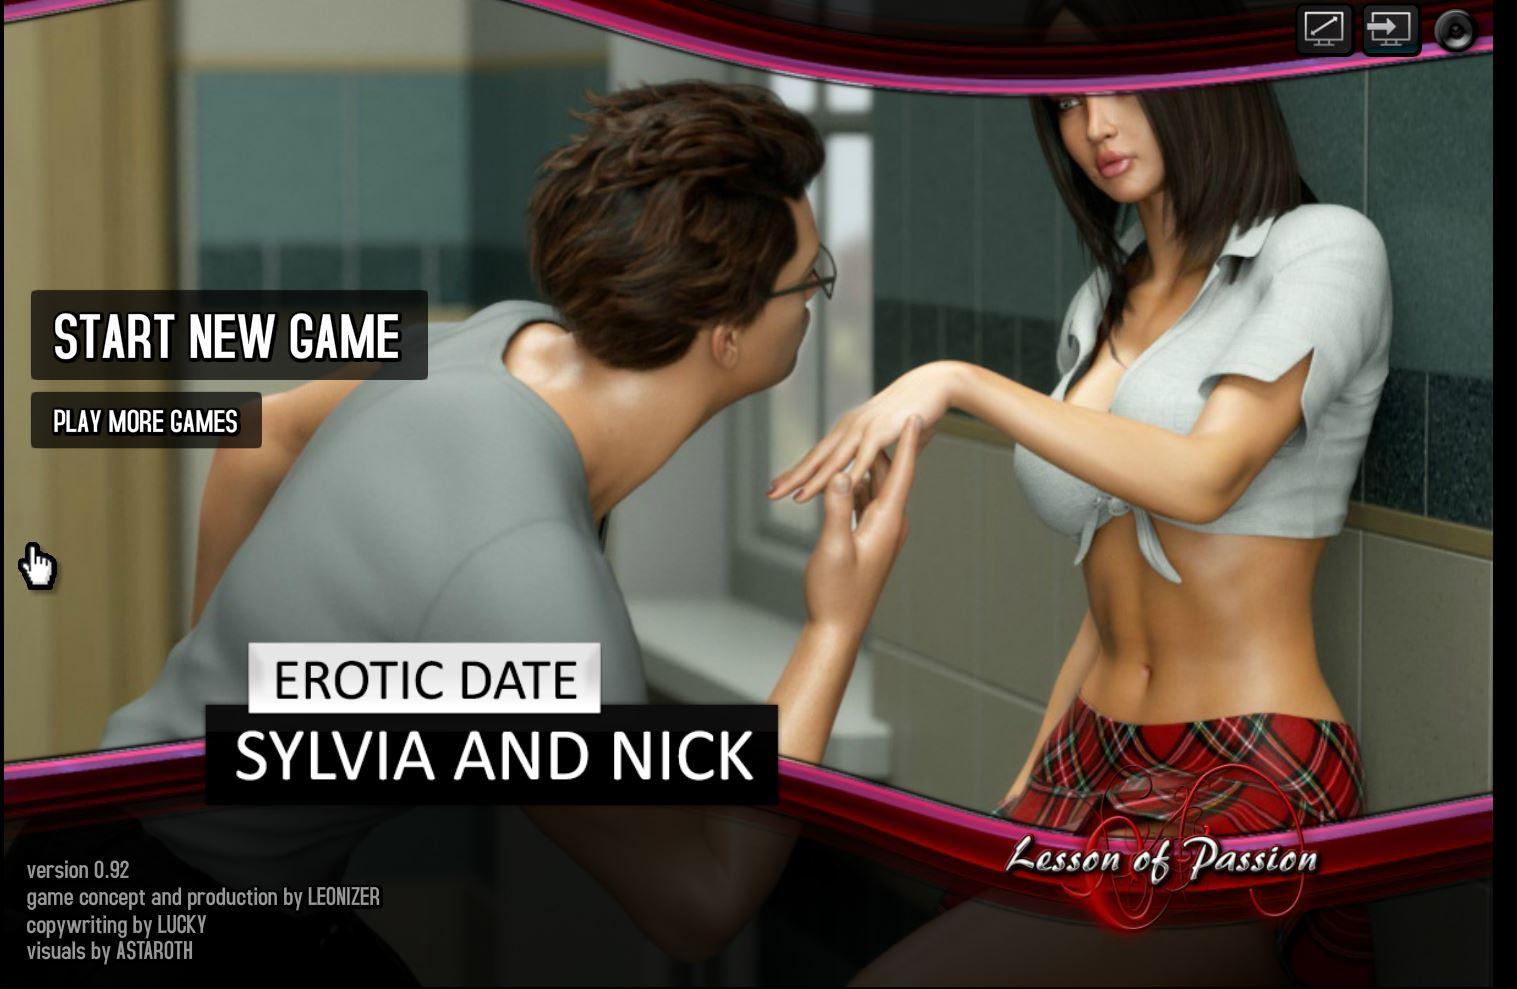 Erotic date sylvia and nick walktrought